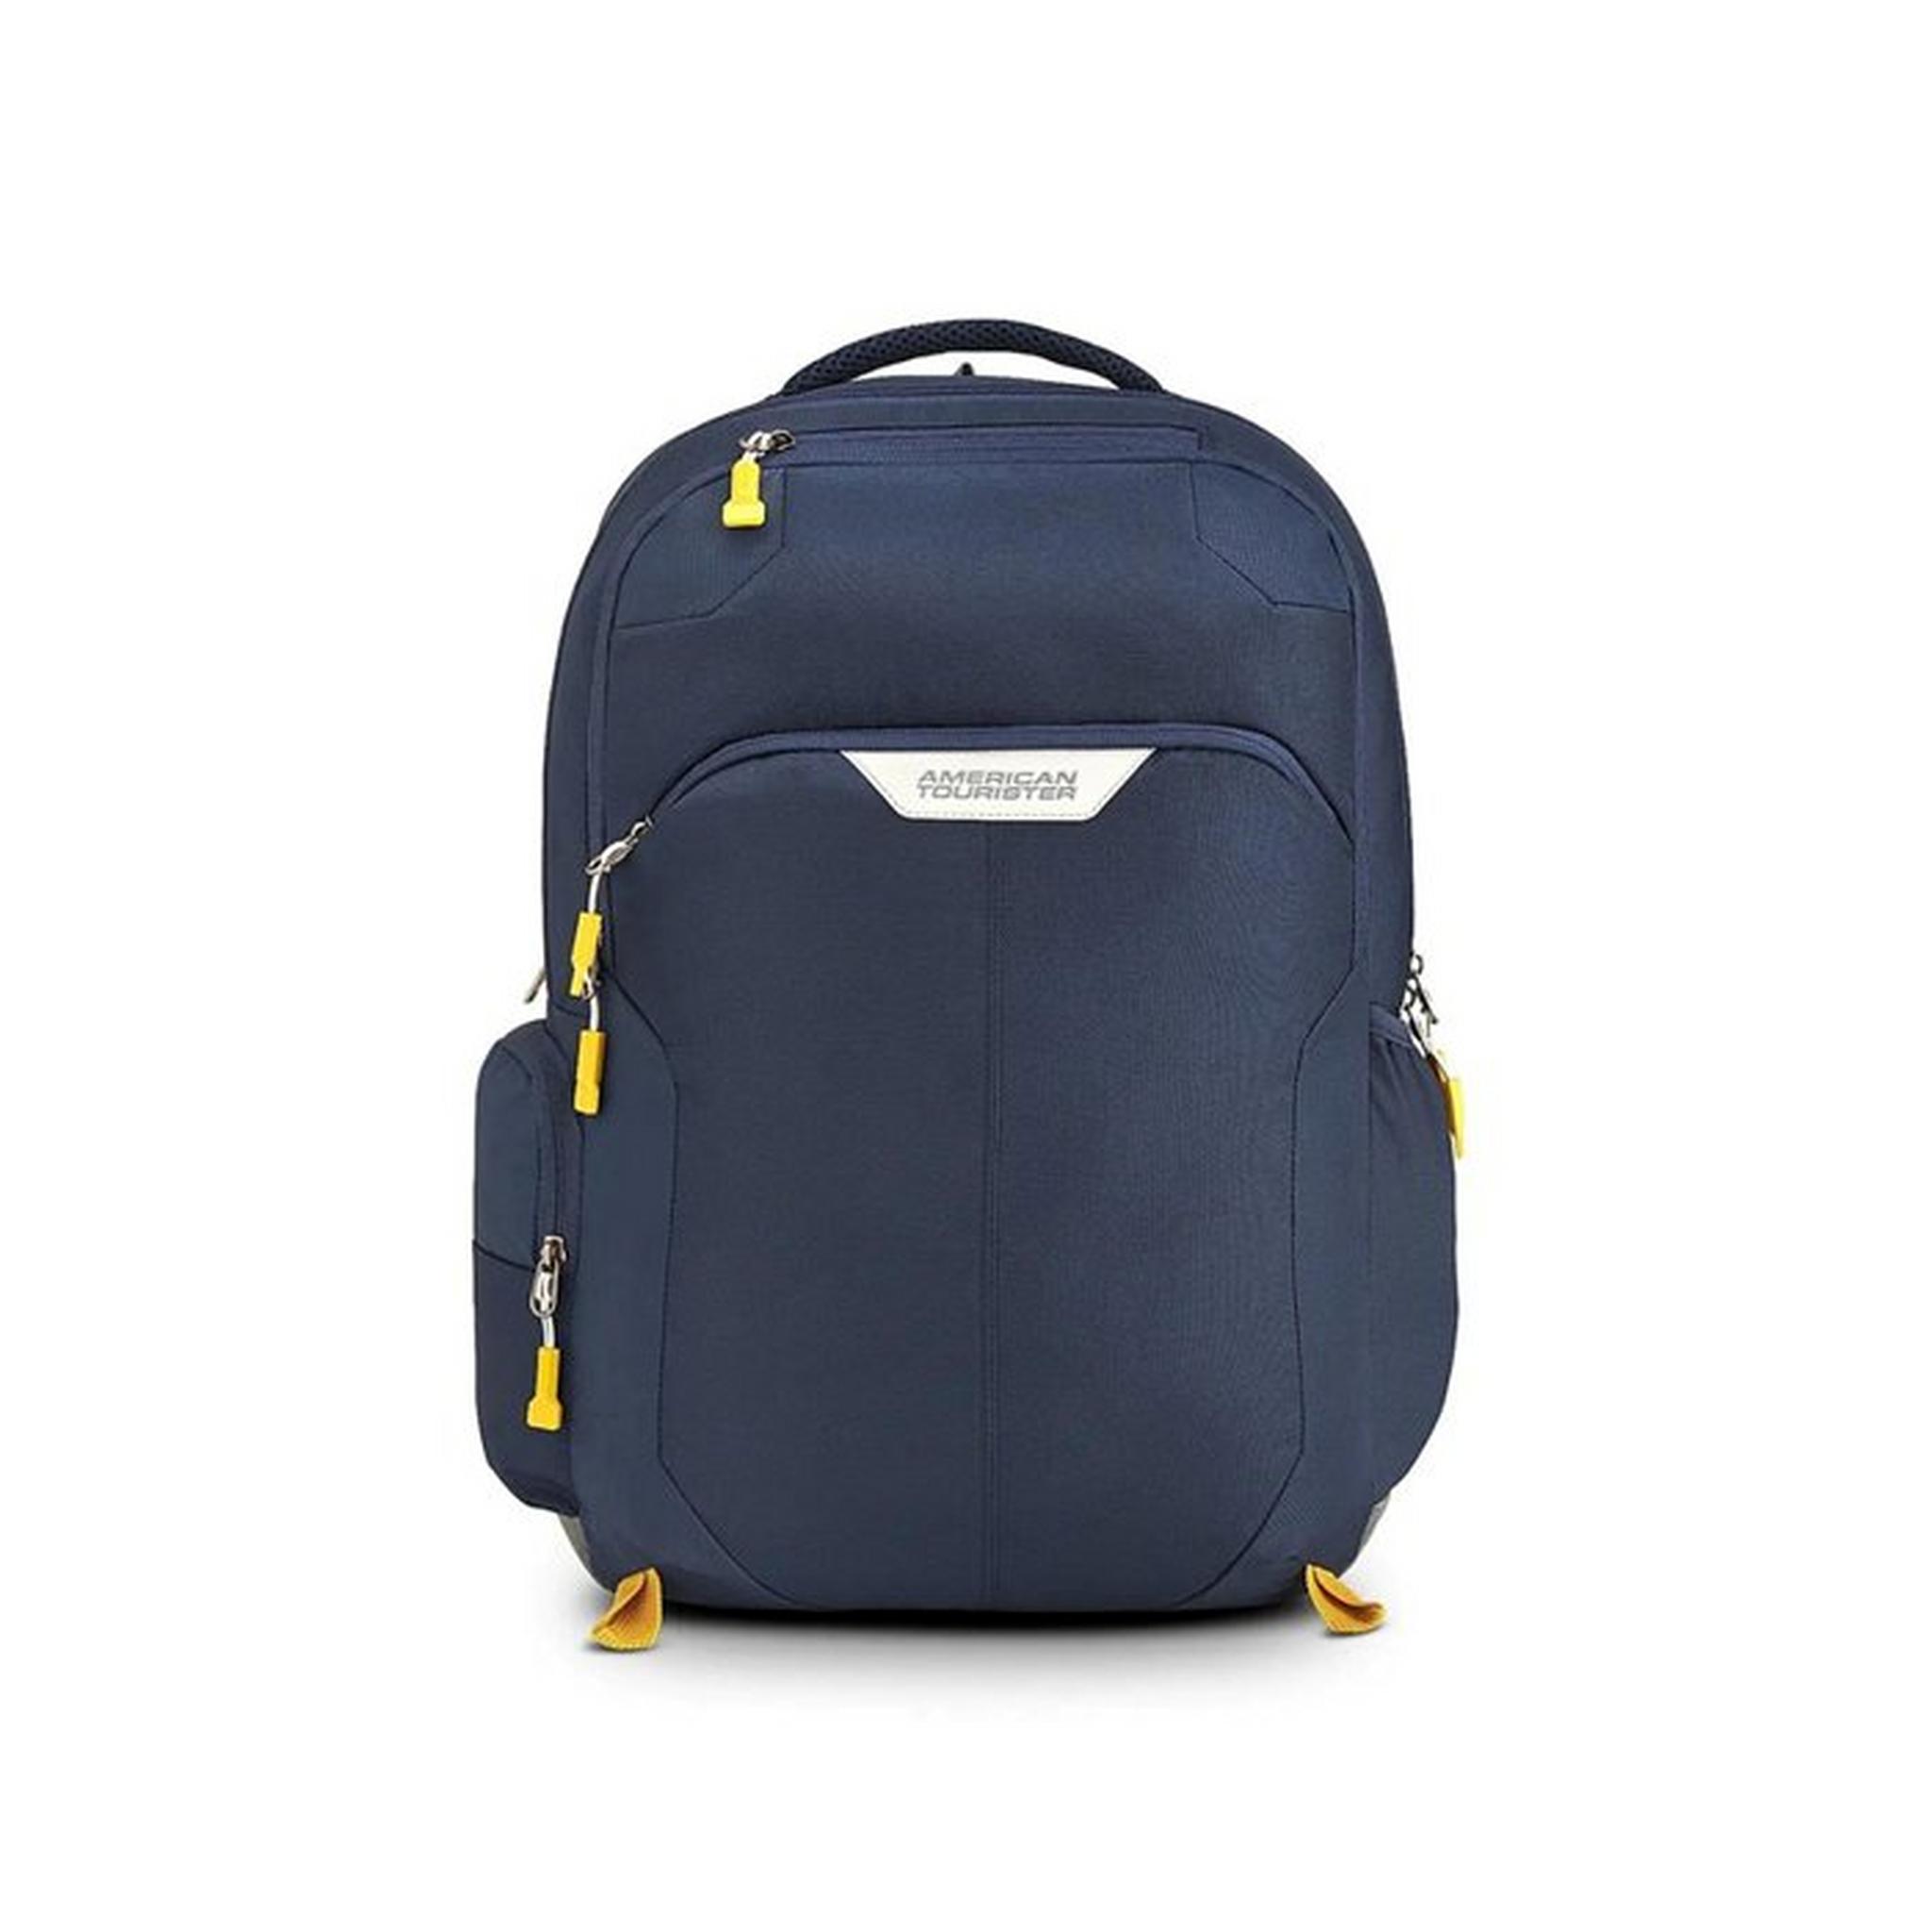 American Tourister Brett 02 Backpack QI5X11003 - Blue| Xcite